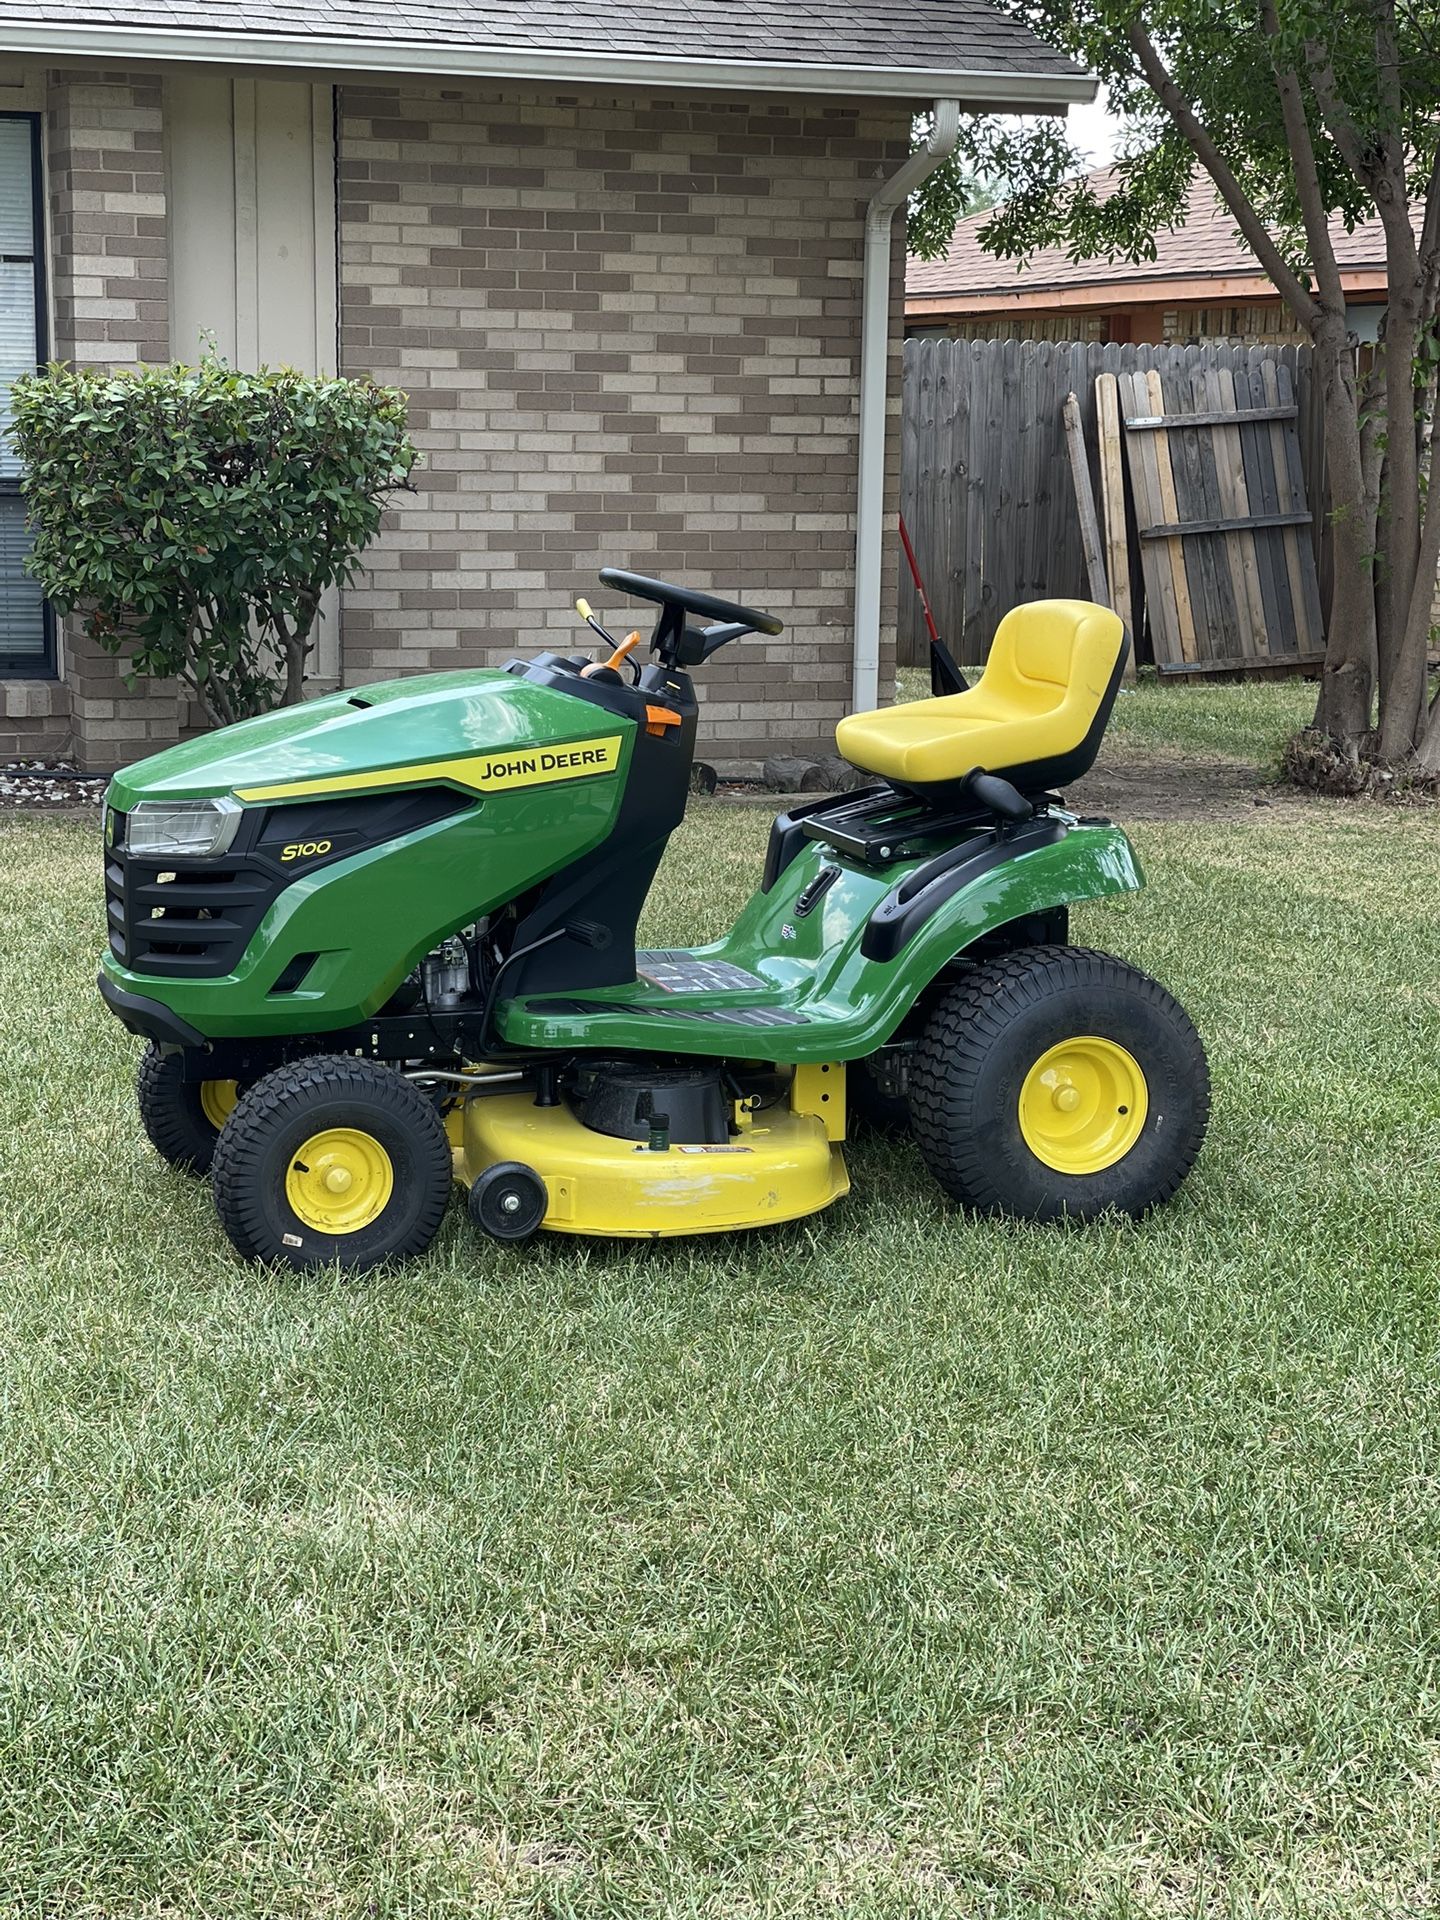 John Deere S100 42 in. 17.5 HP Gas Hydrostatic Riding Lawn Tractor 🚜 